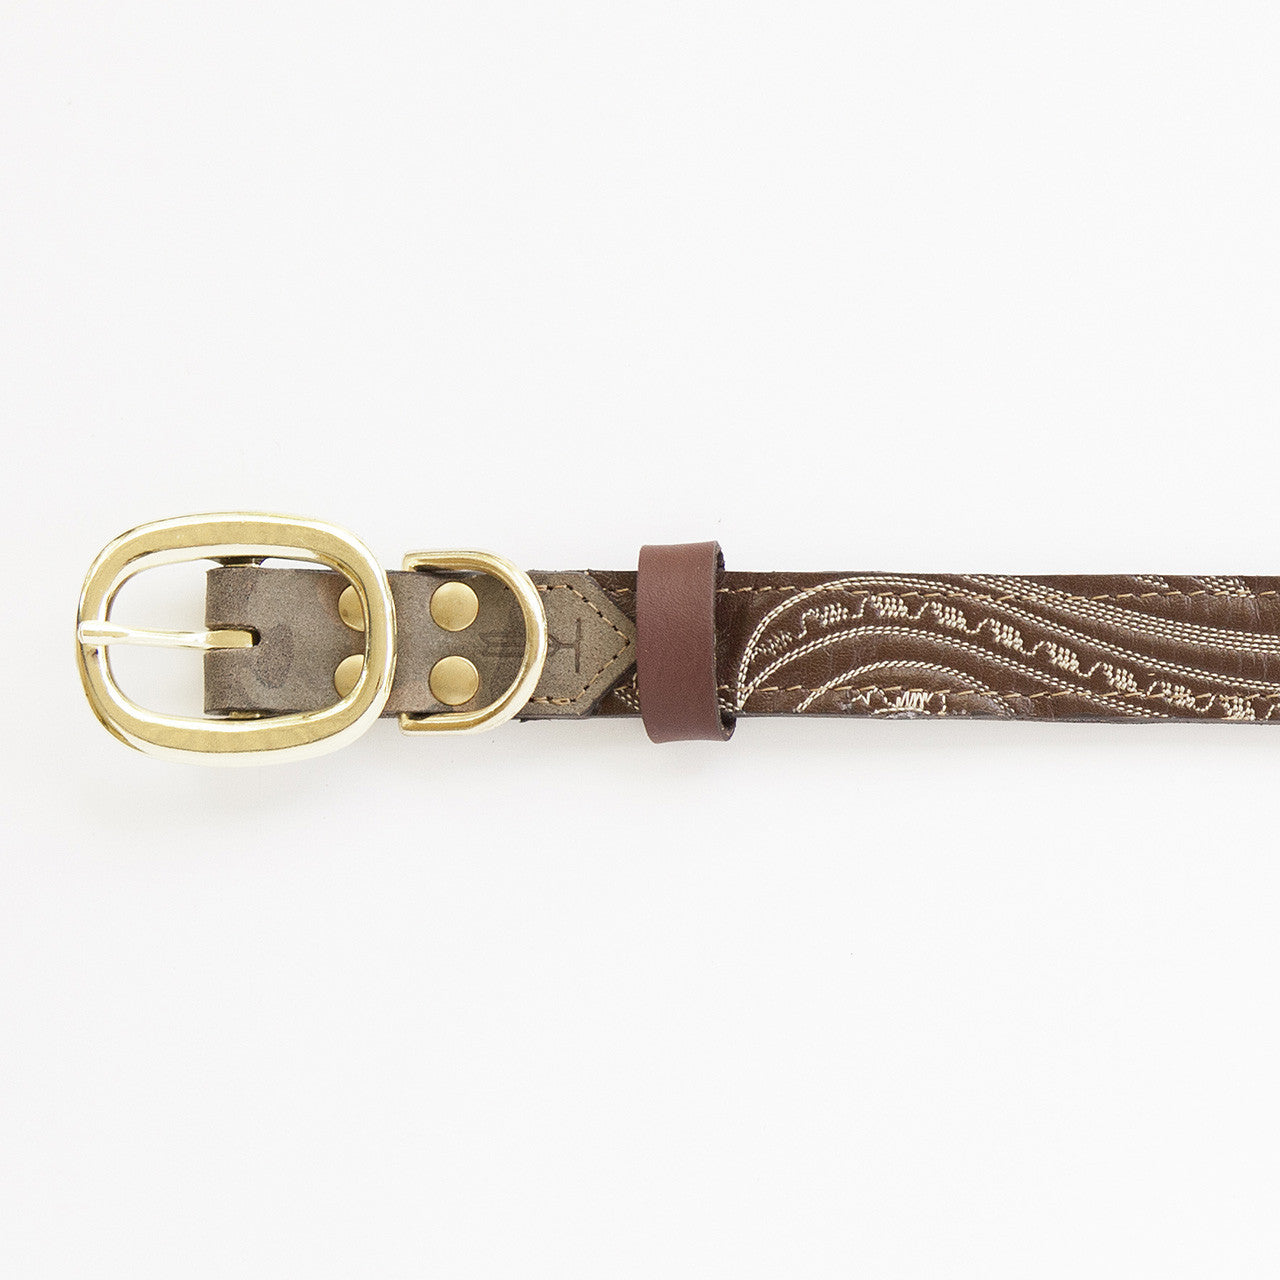 Camo Dog Collar with Chocolate Leather + Ivory Swirl Stitching (buckle)